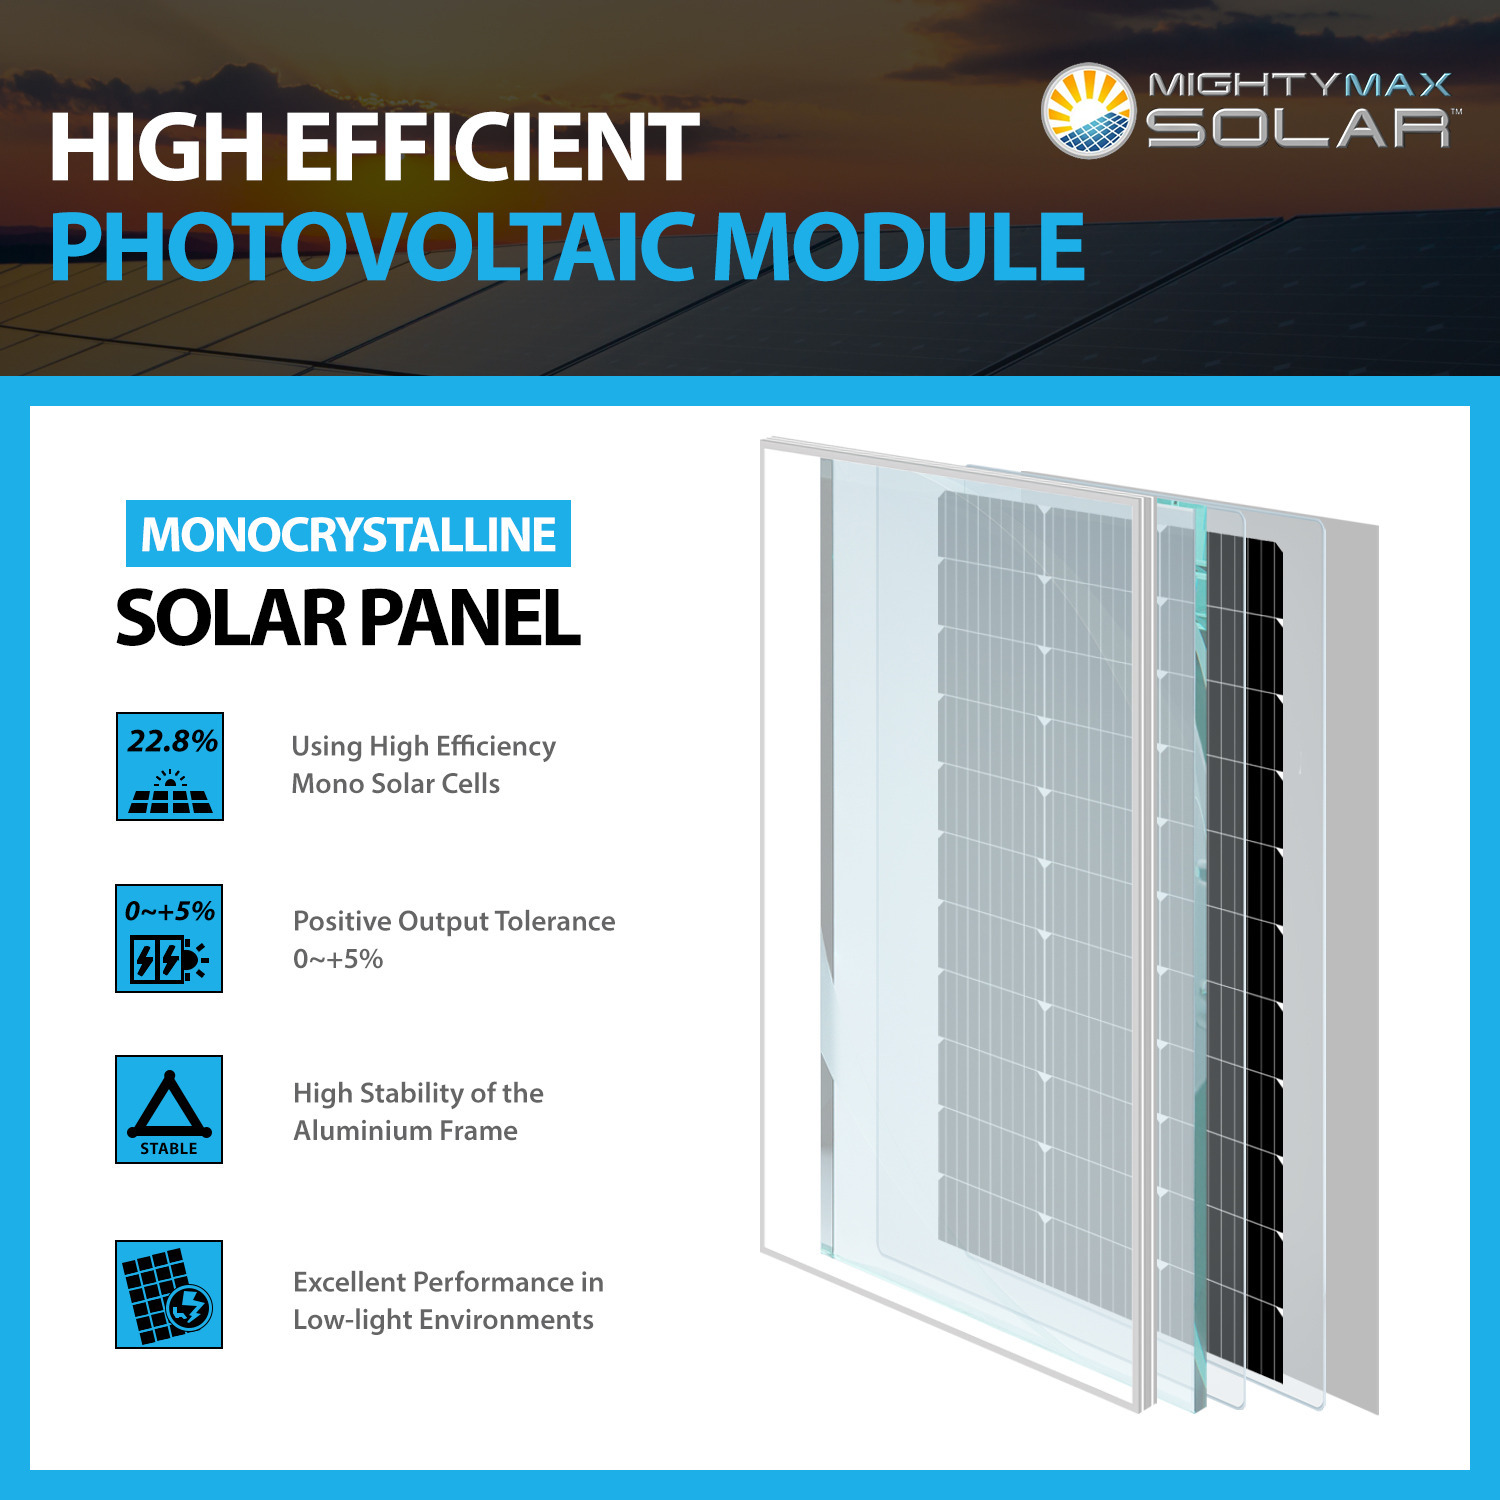 100 Watt Monocrystalline 400W Solar Panel - 4 Pack